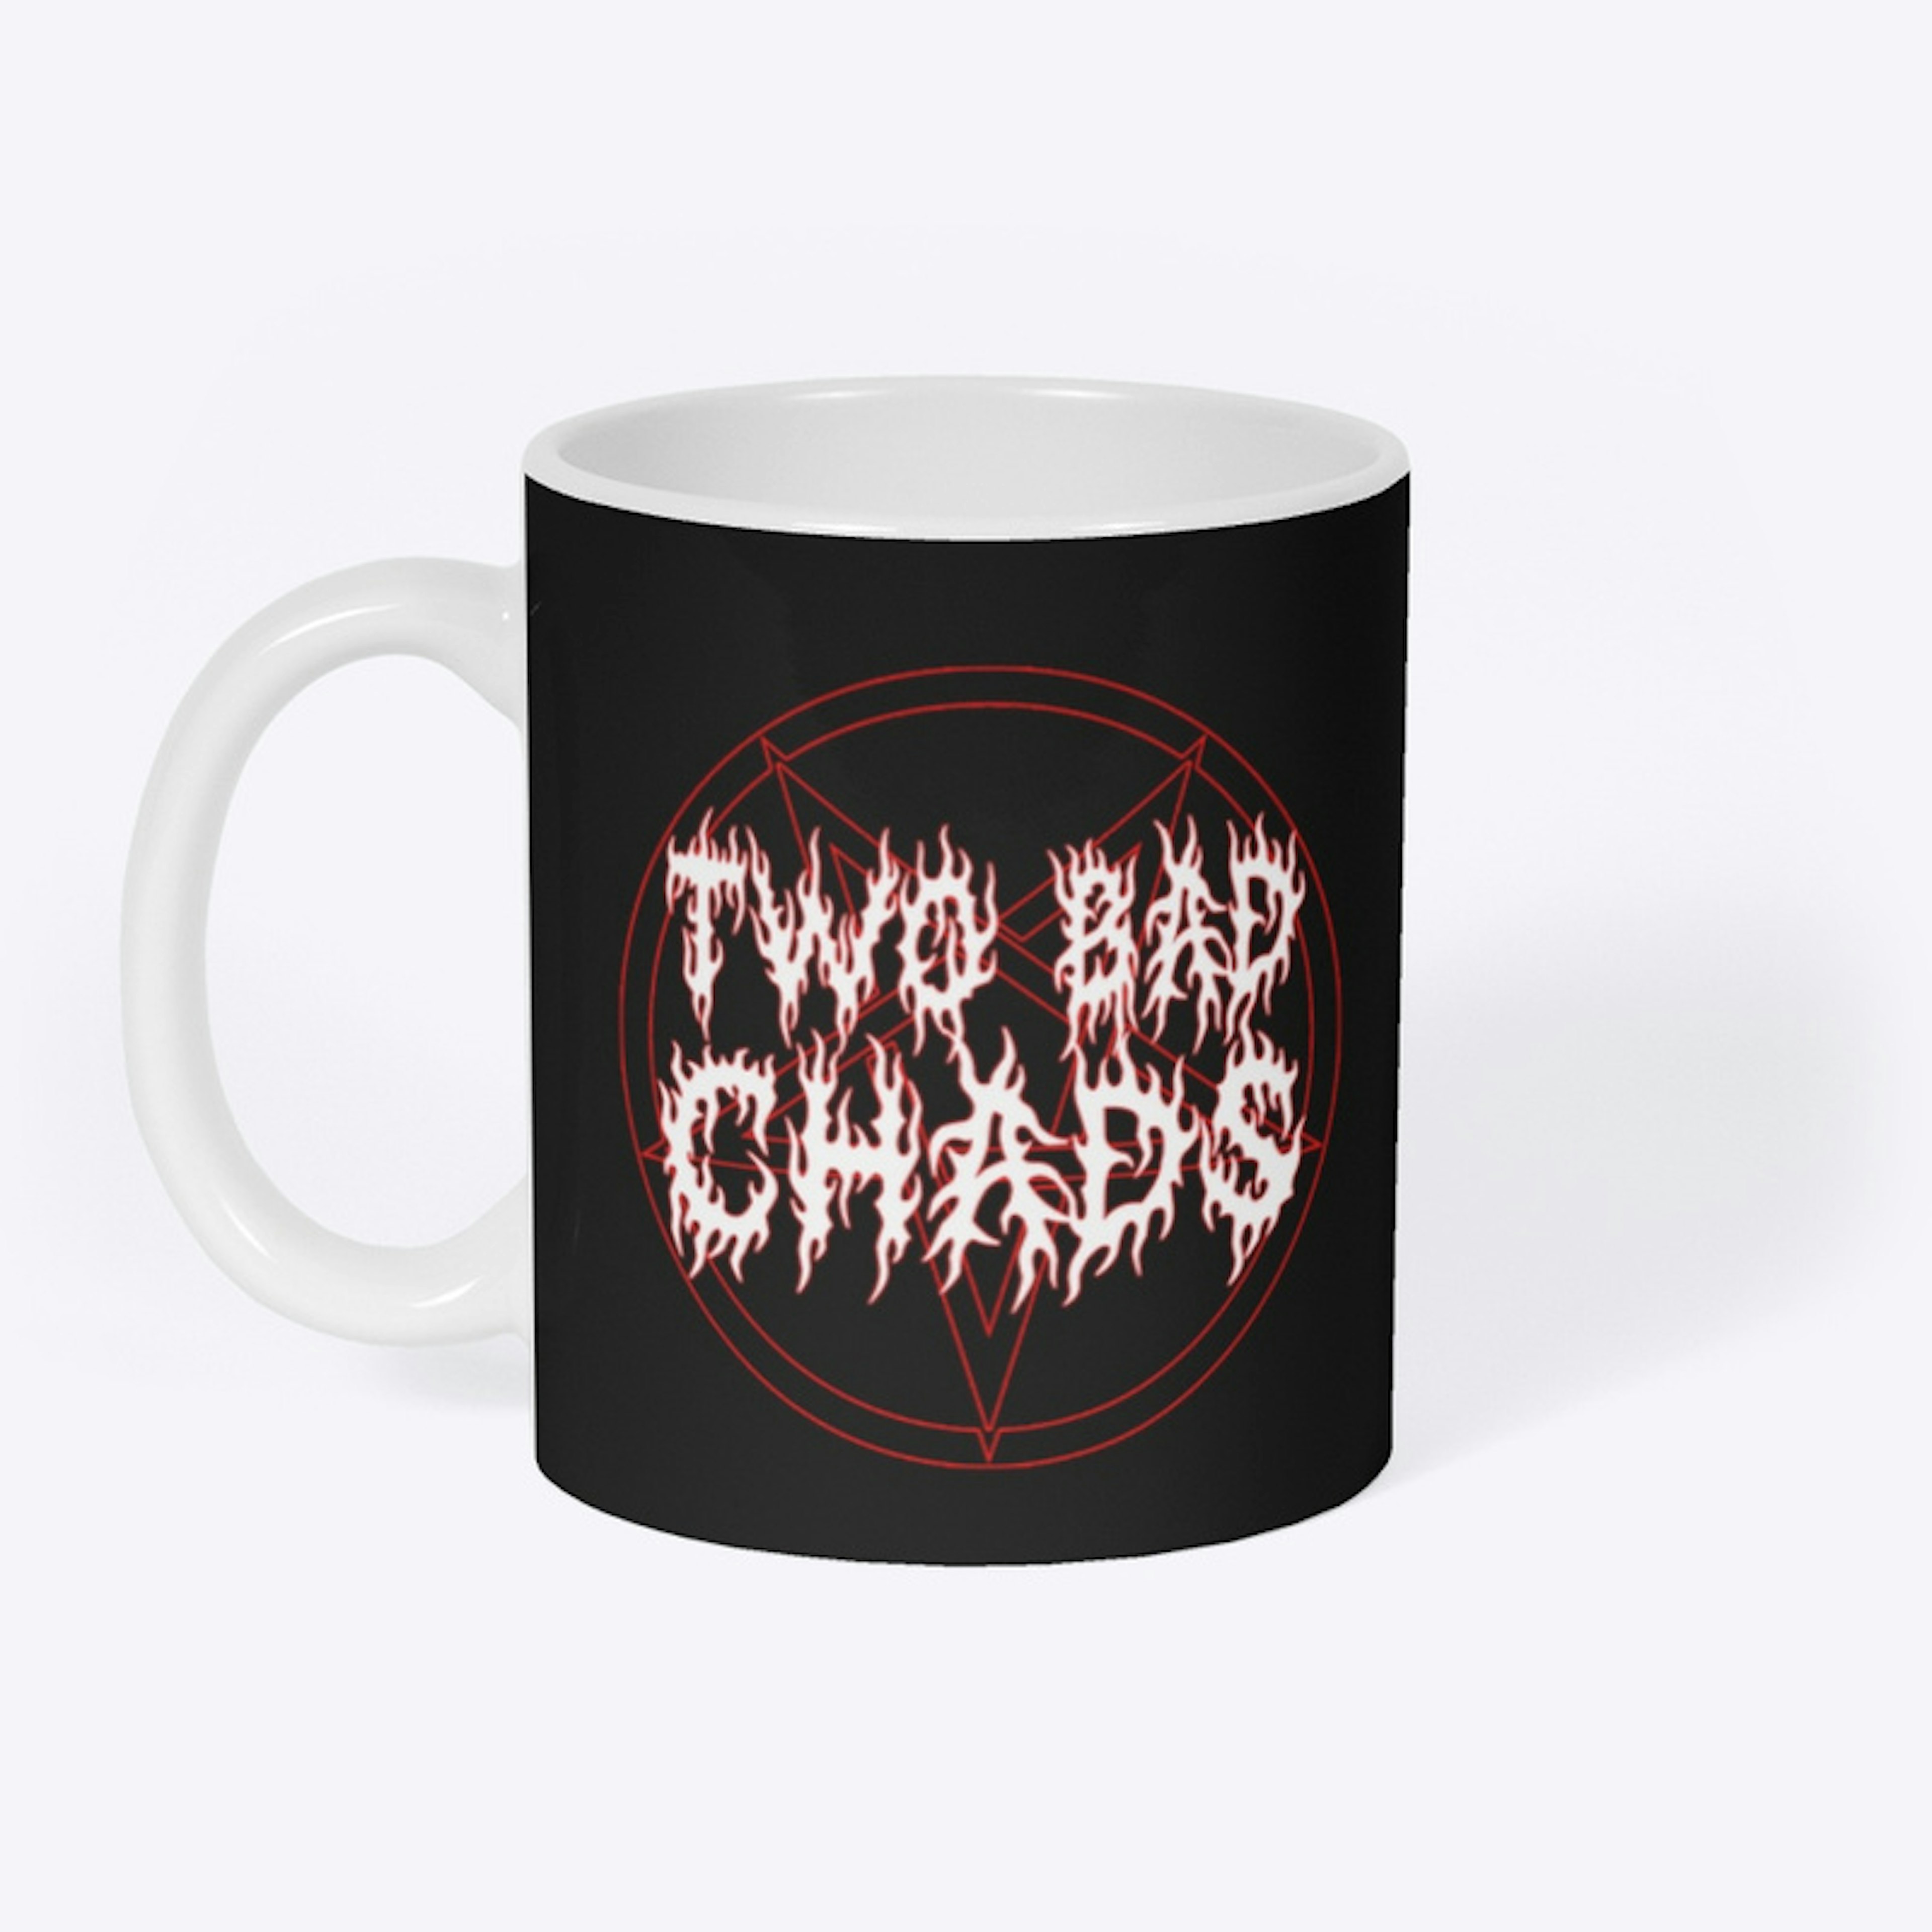 Two Bad Chads Mug